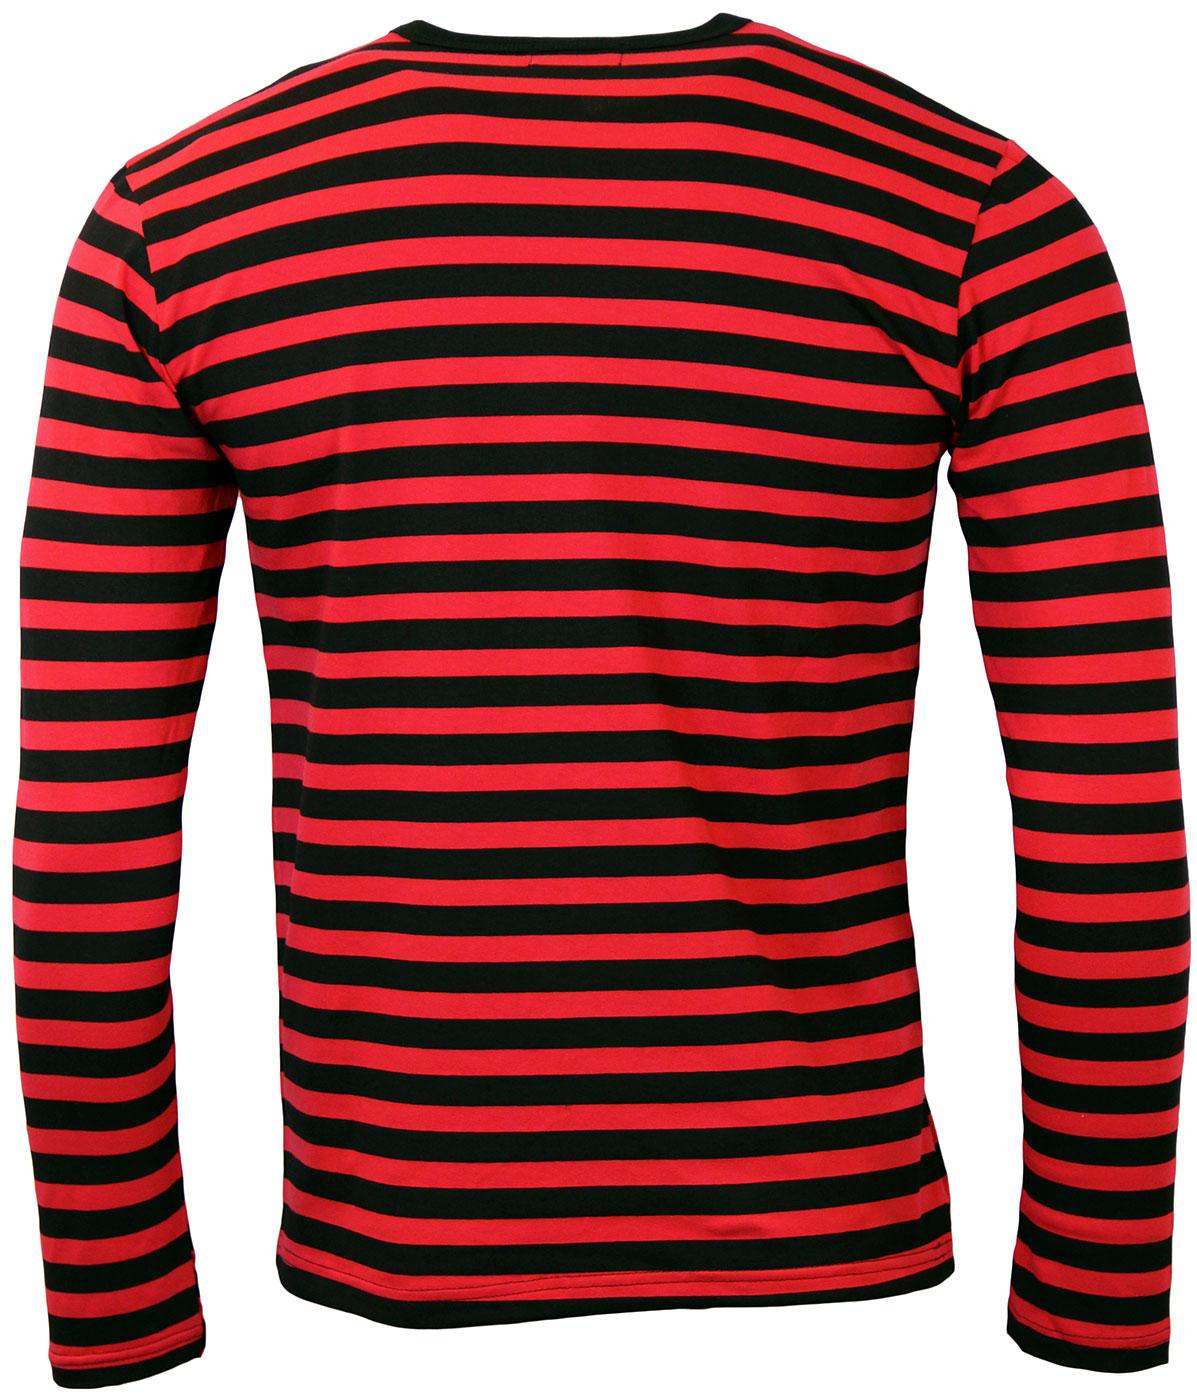 Haight Ashbury Striped T-Shirt | Madcap England Retro Sixties Mod Tee